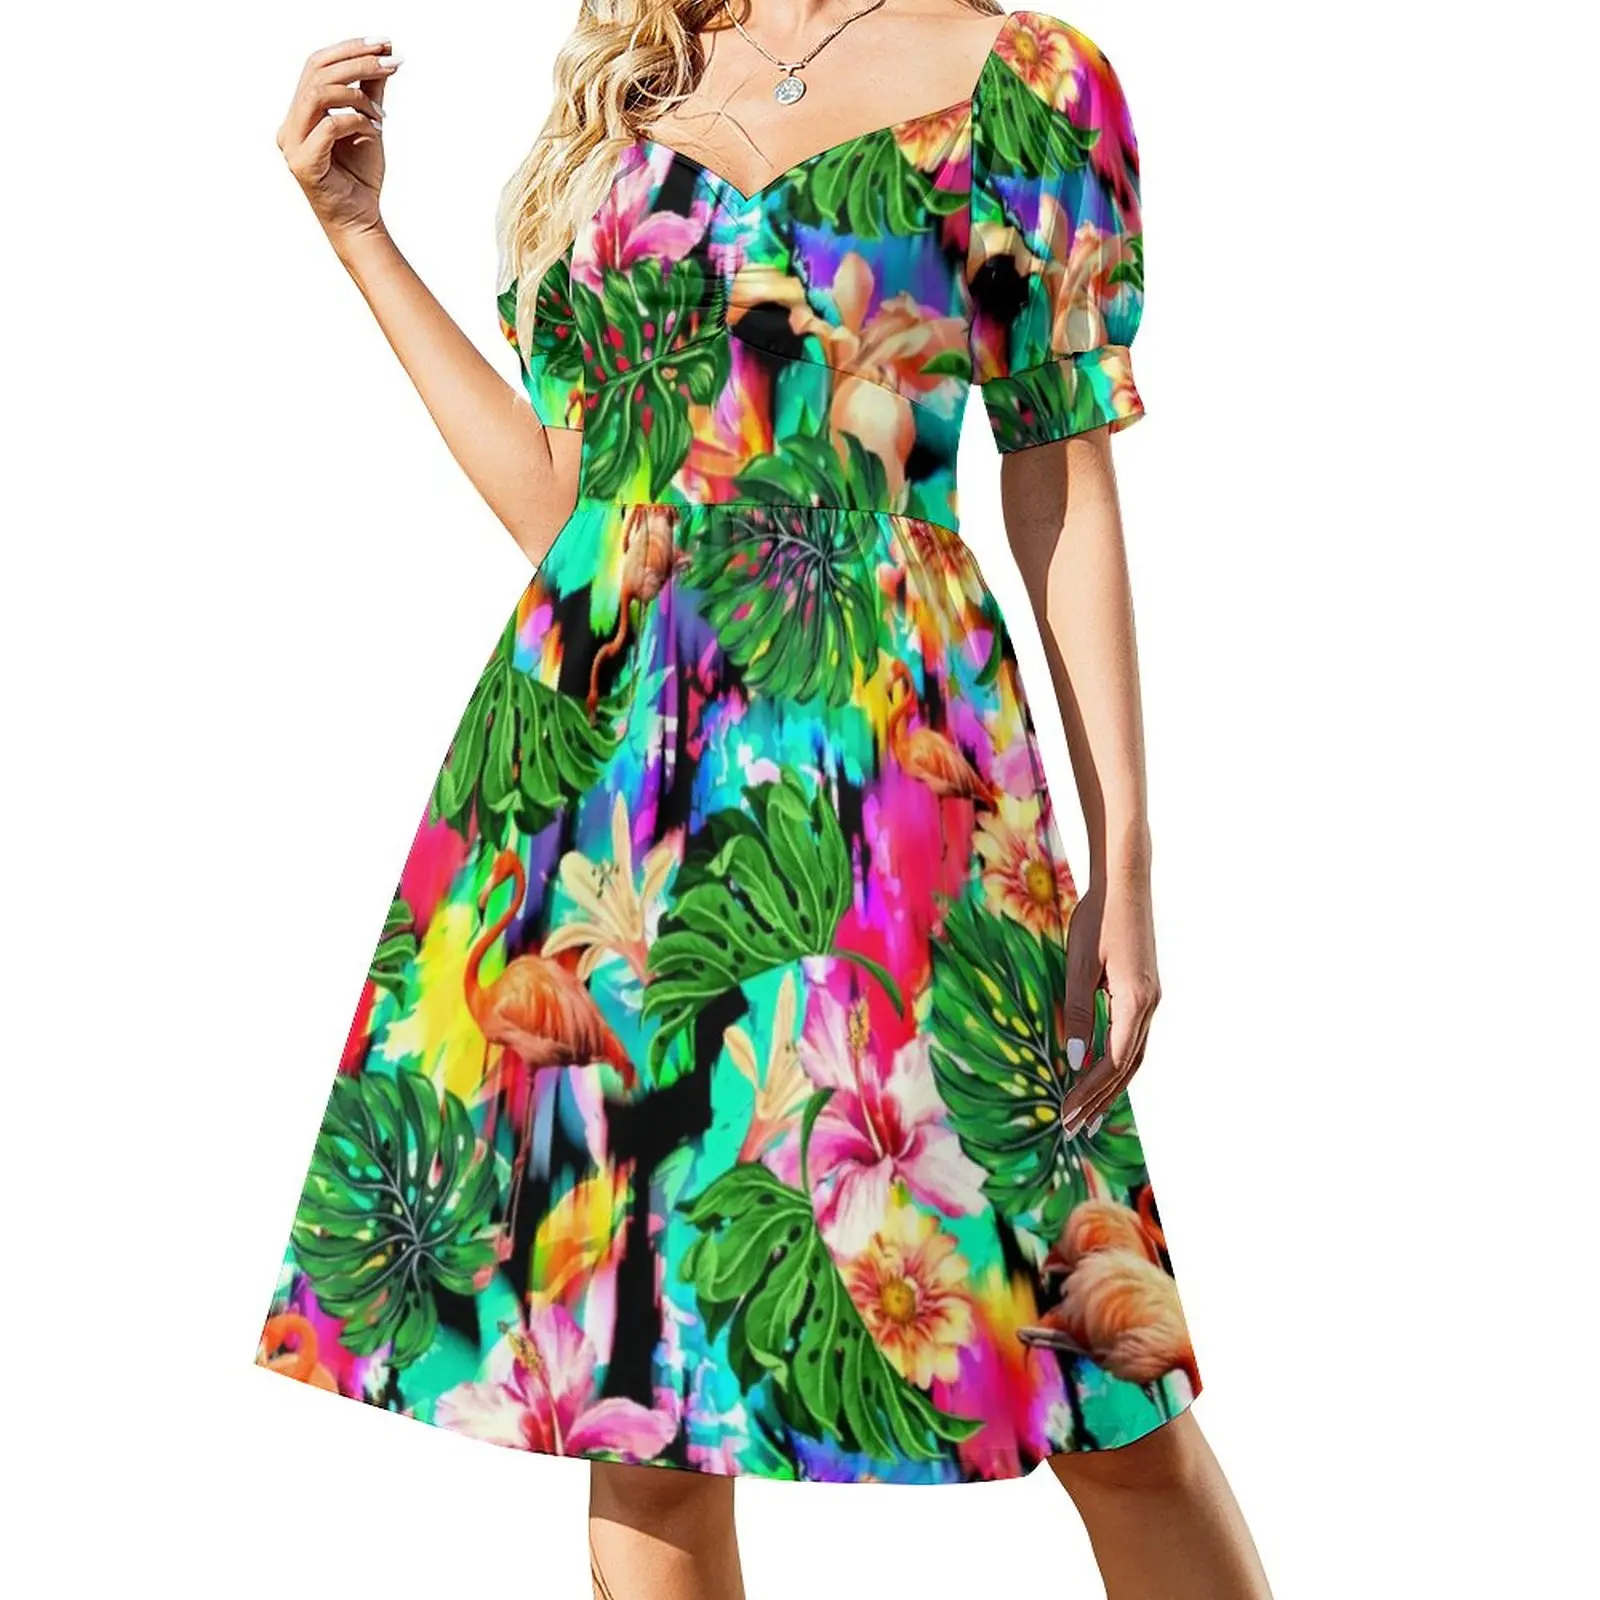 

Flamingo Print Dress Sexy V Neck Tropical Leaves Pretty Dresses Female Street Fashion Custom Big Size Casual Dress Gift Idea